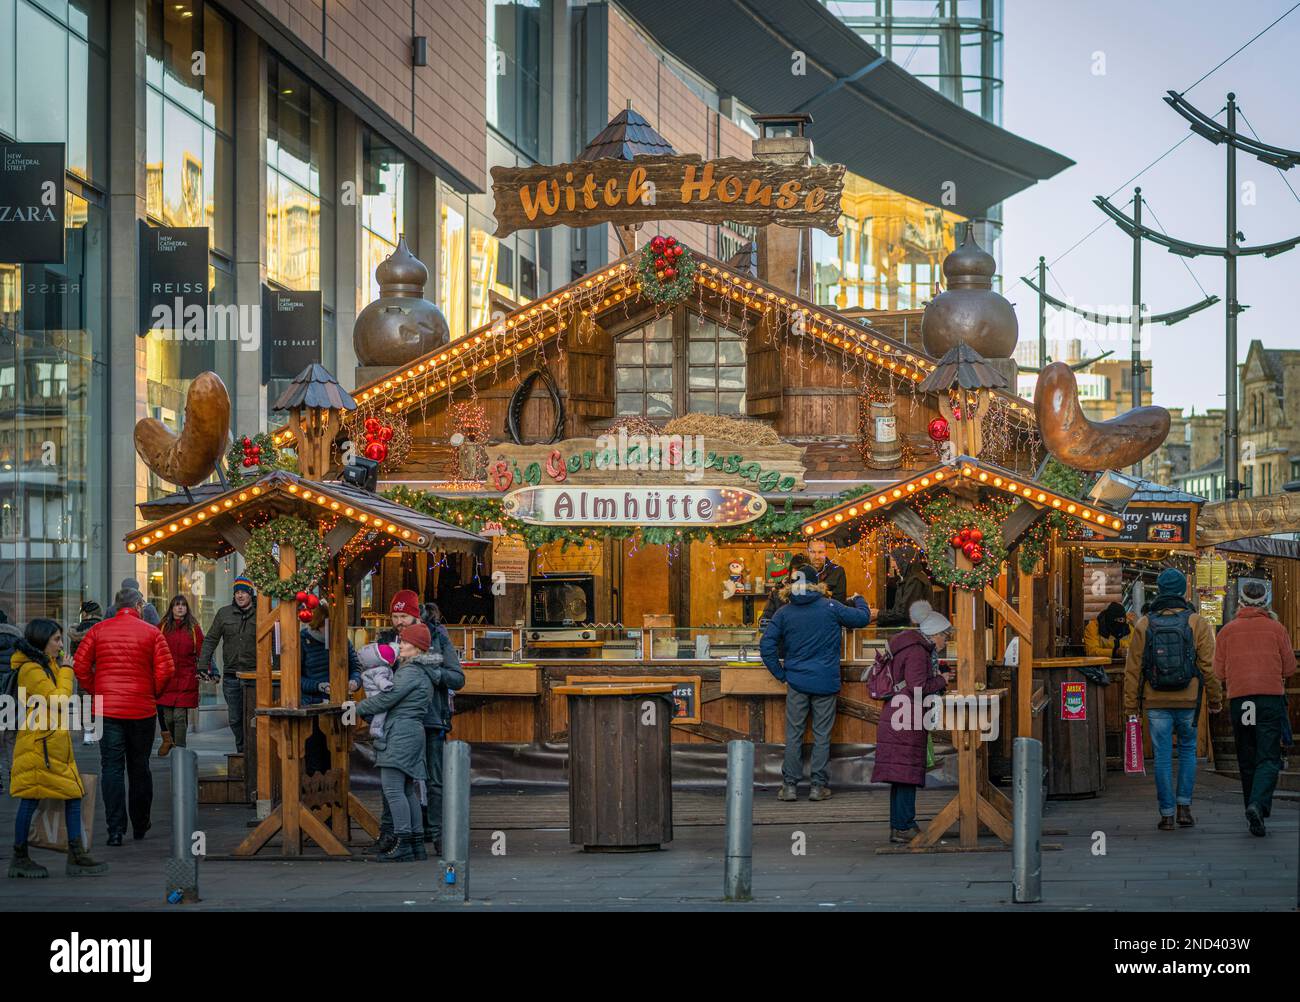 Large wooden chalet style stall selling bratwurst. Manchester Christmas markets. UK Stock Photo